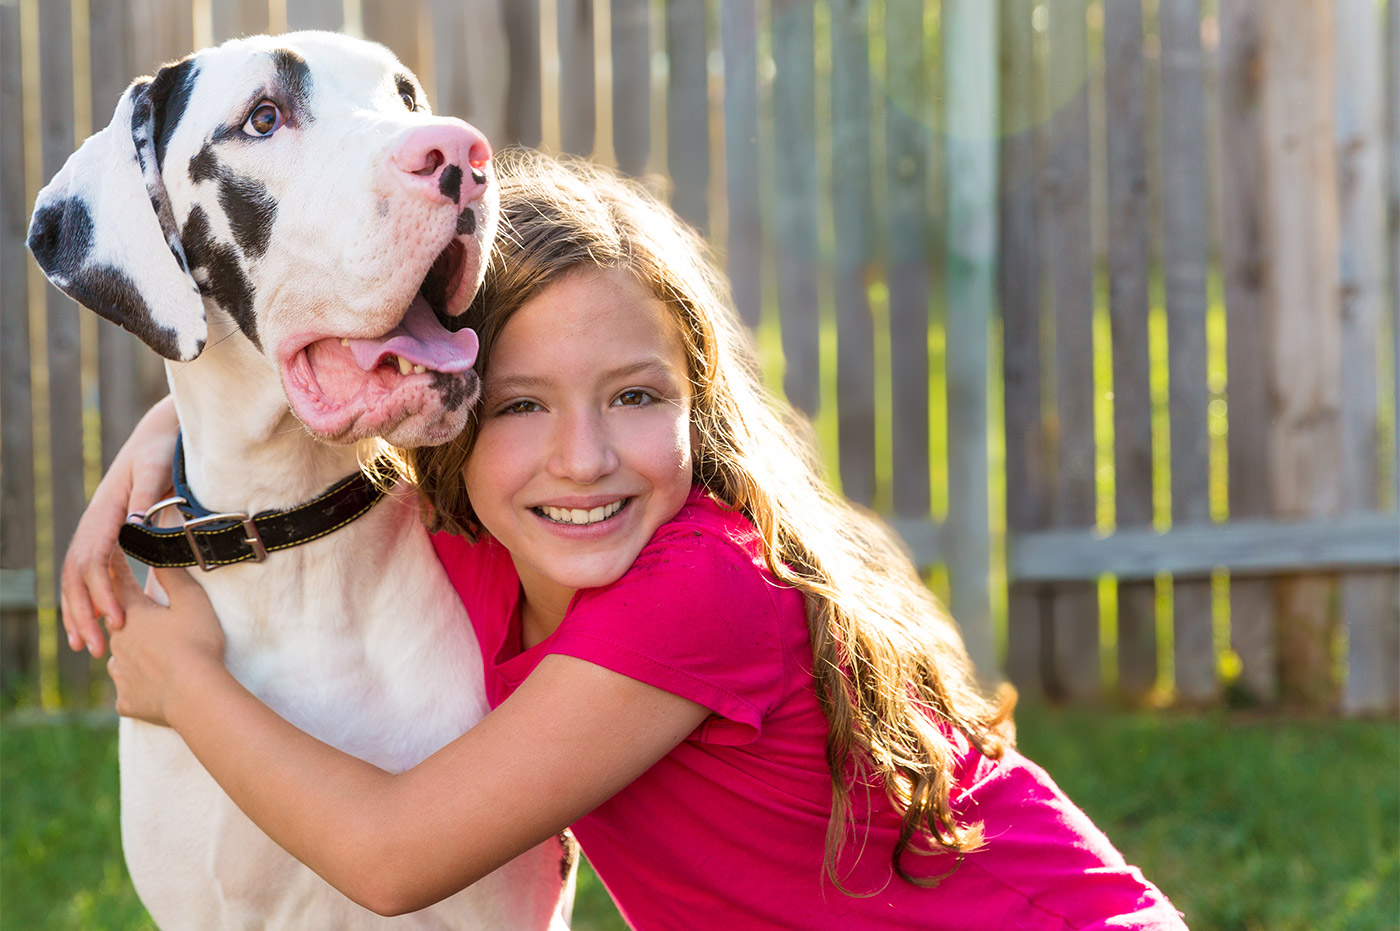 A little girl hugging a large dog.